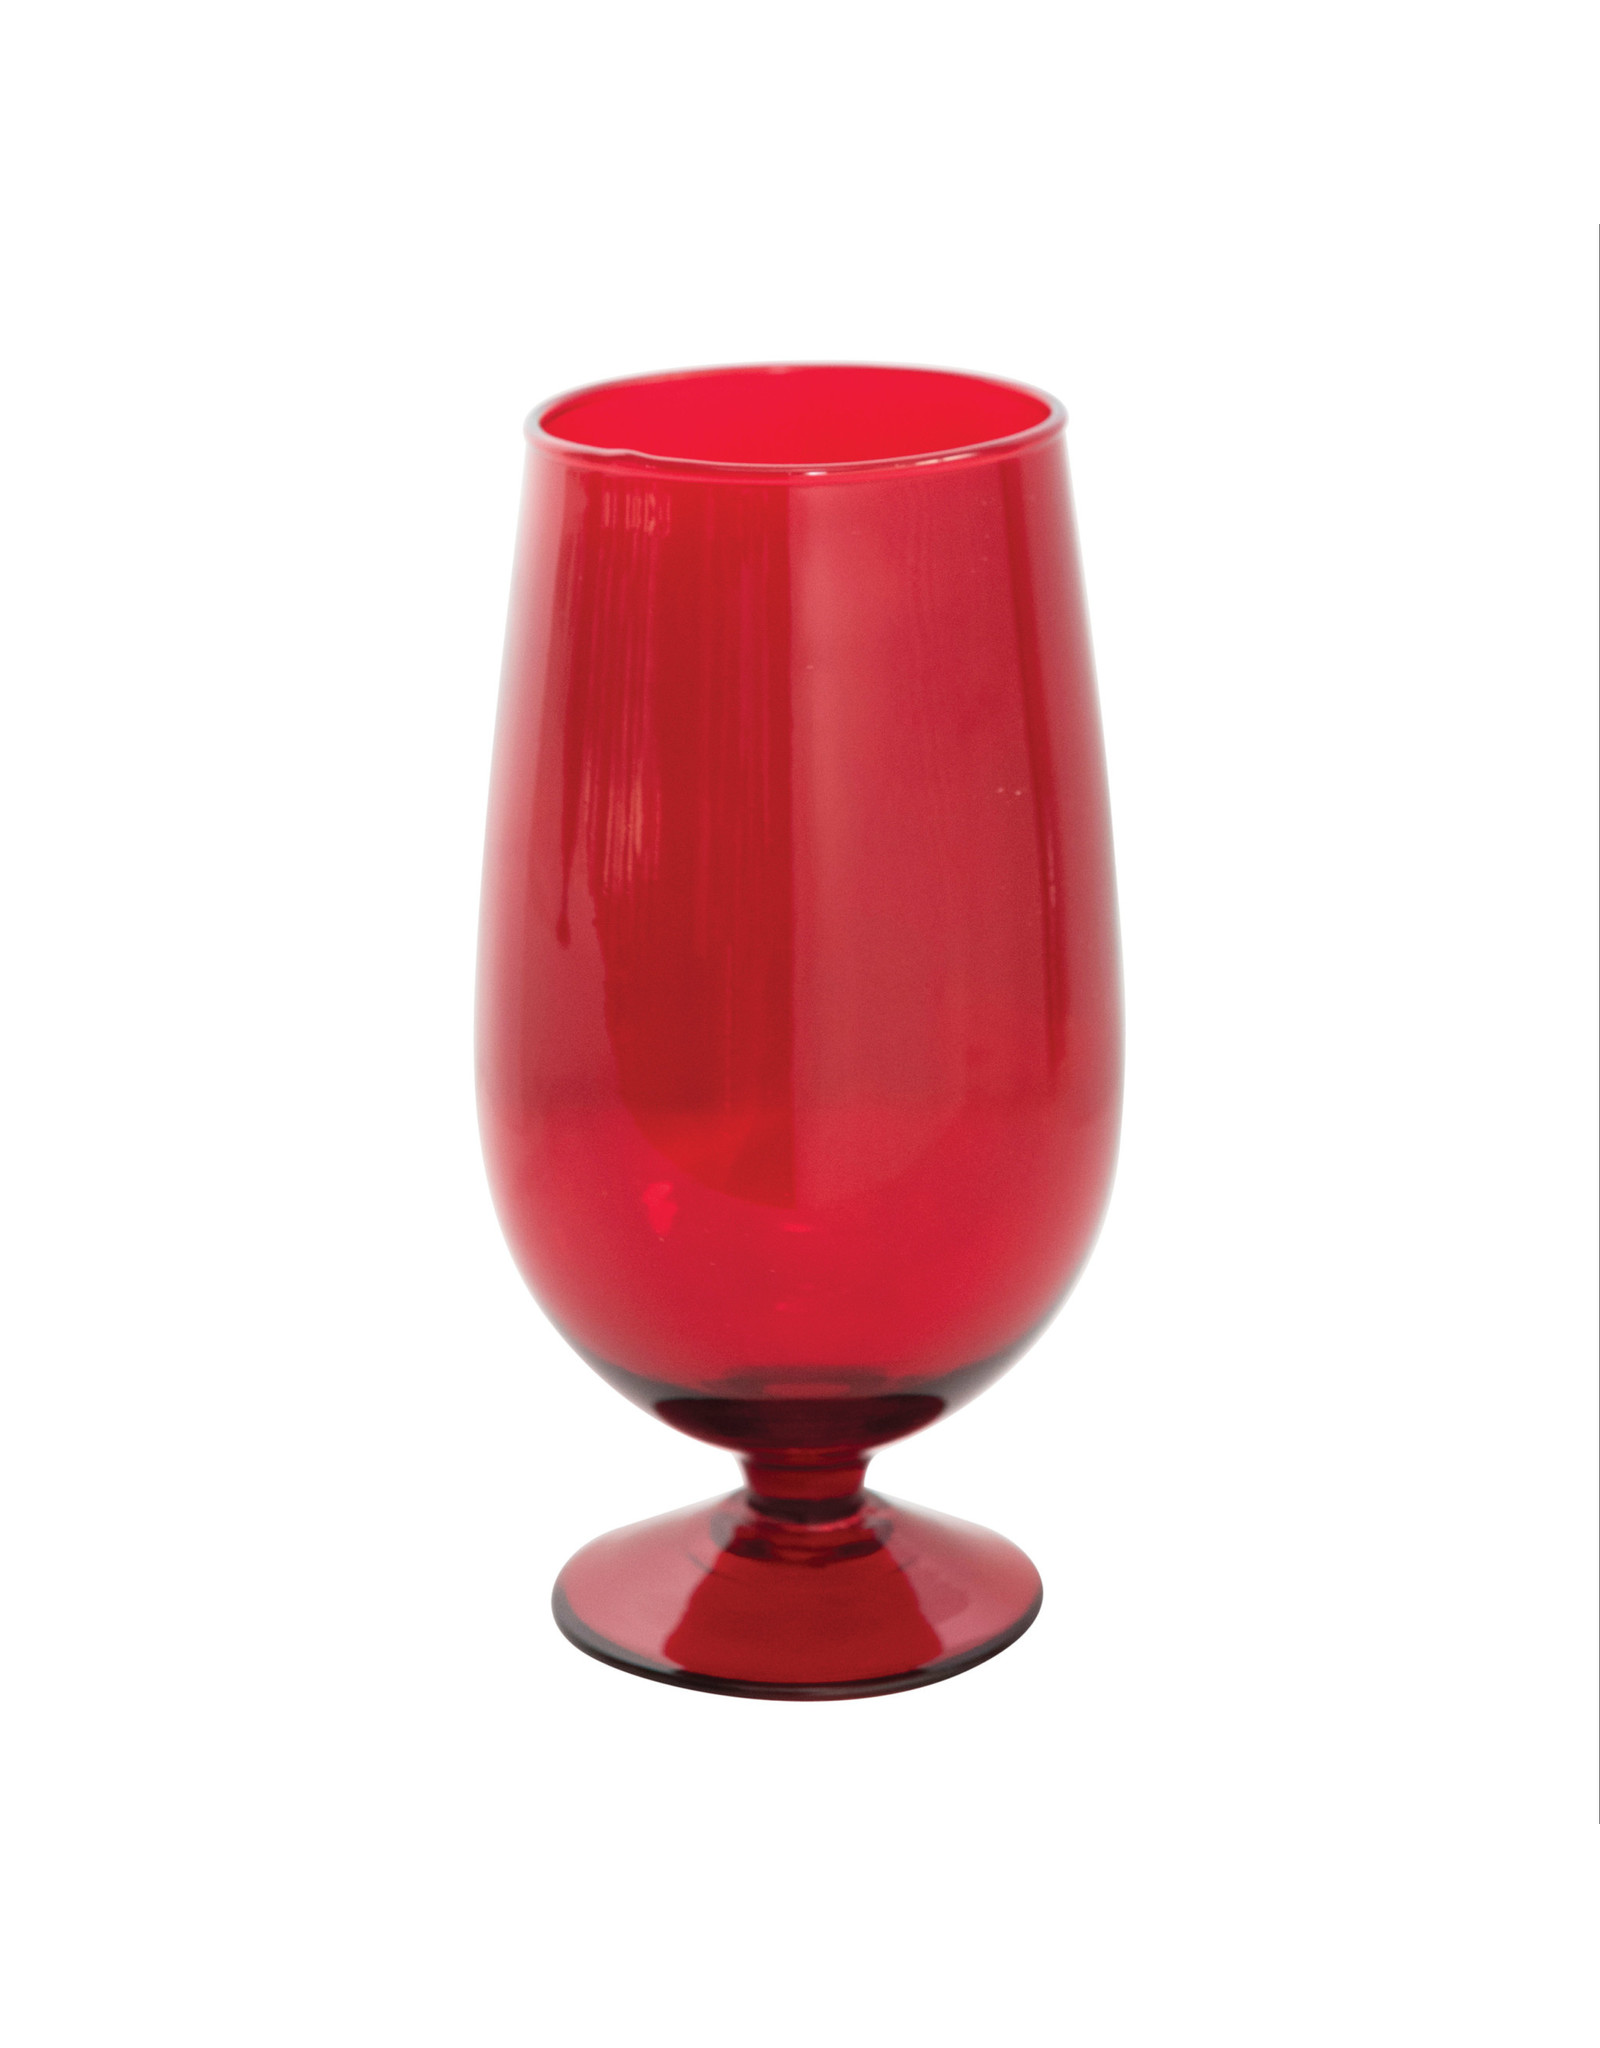 XS1846 12 oz Stemmed Glass, Red